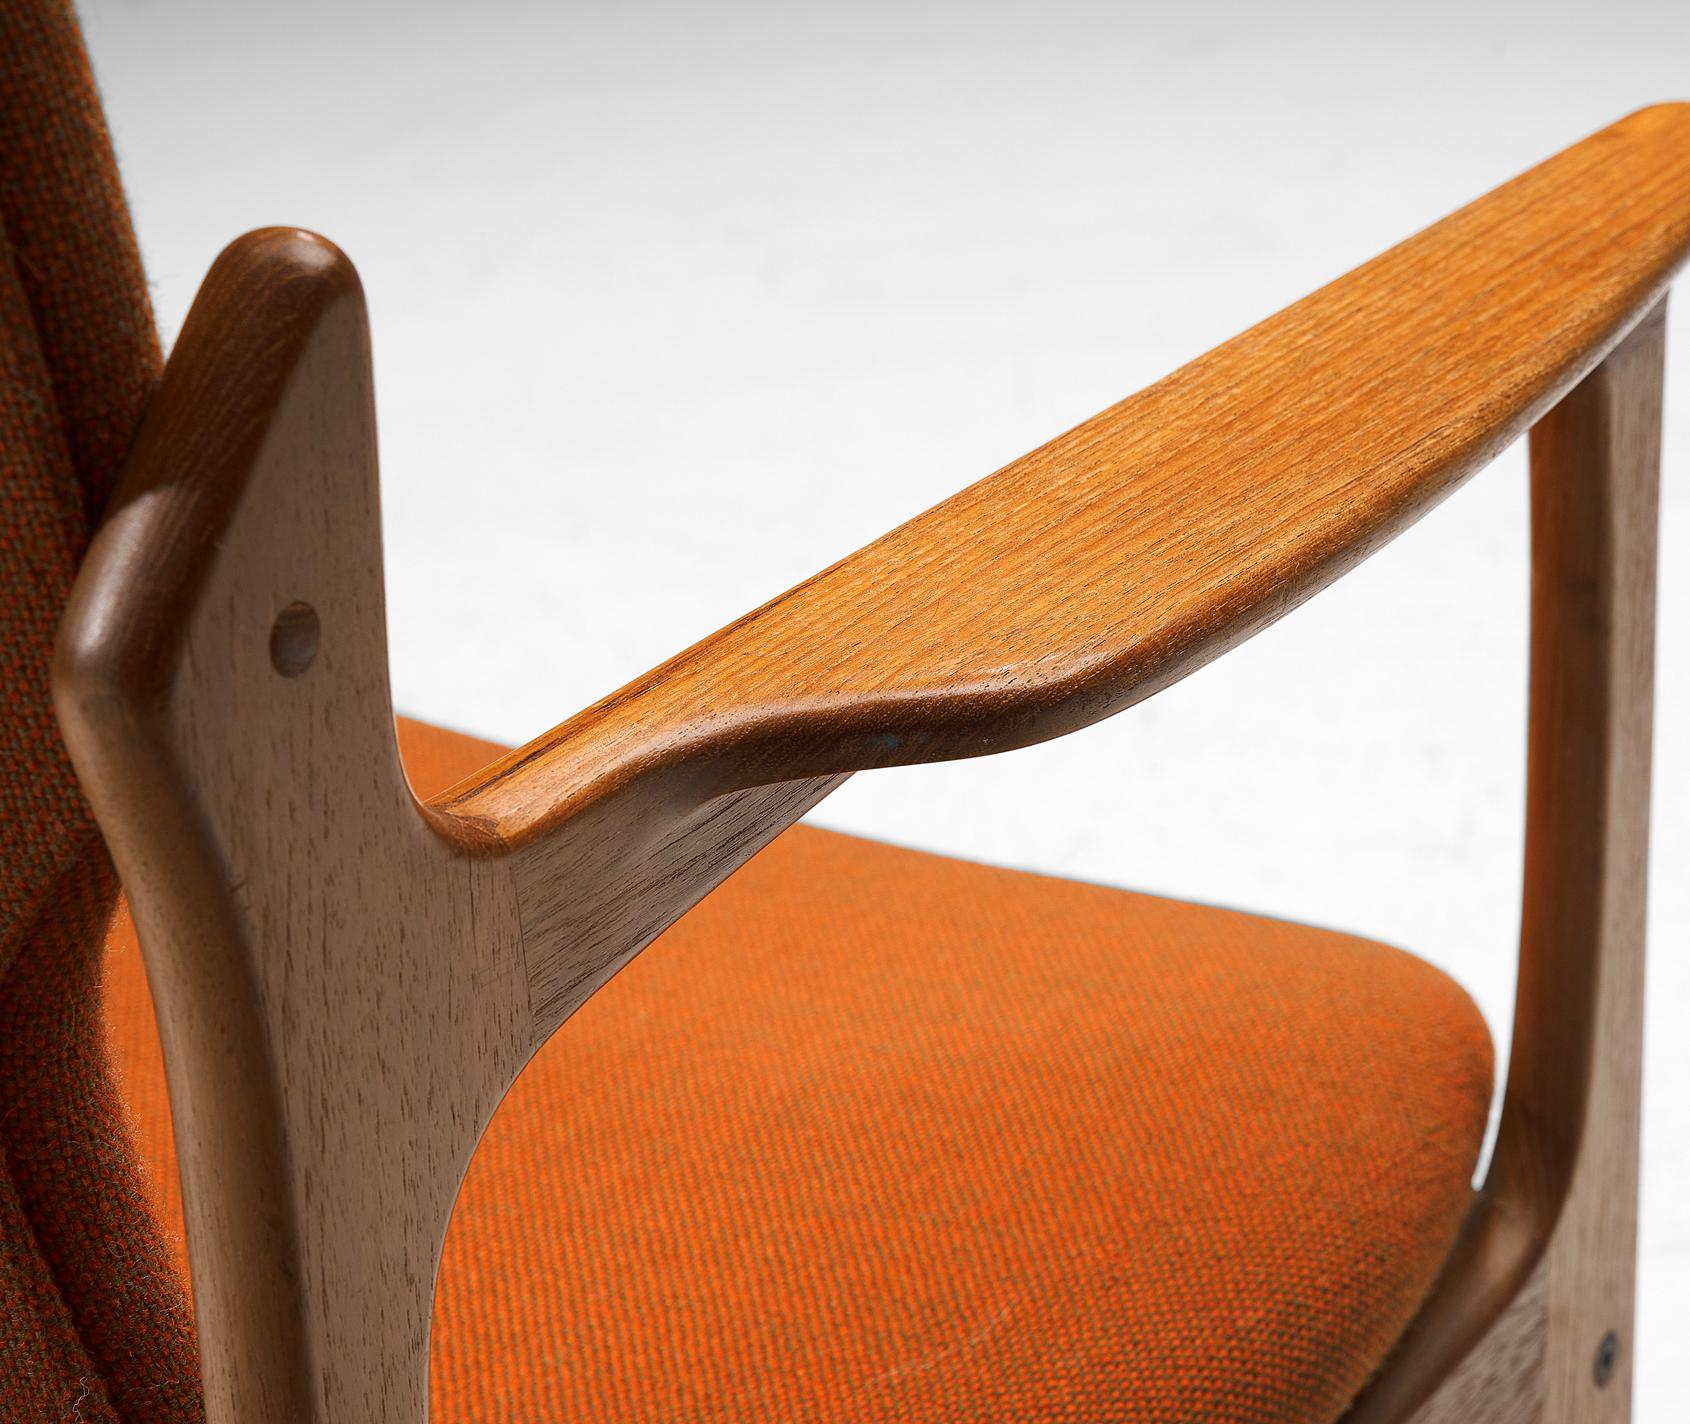 Fabric Vamdrup Stolefabrik Armchair in Teak and Orange Upholstery  For Sale